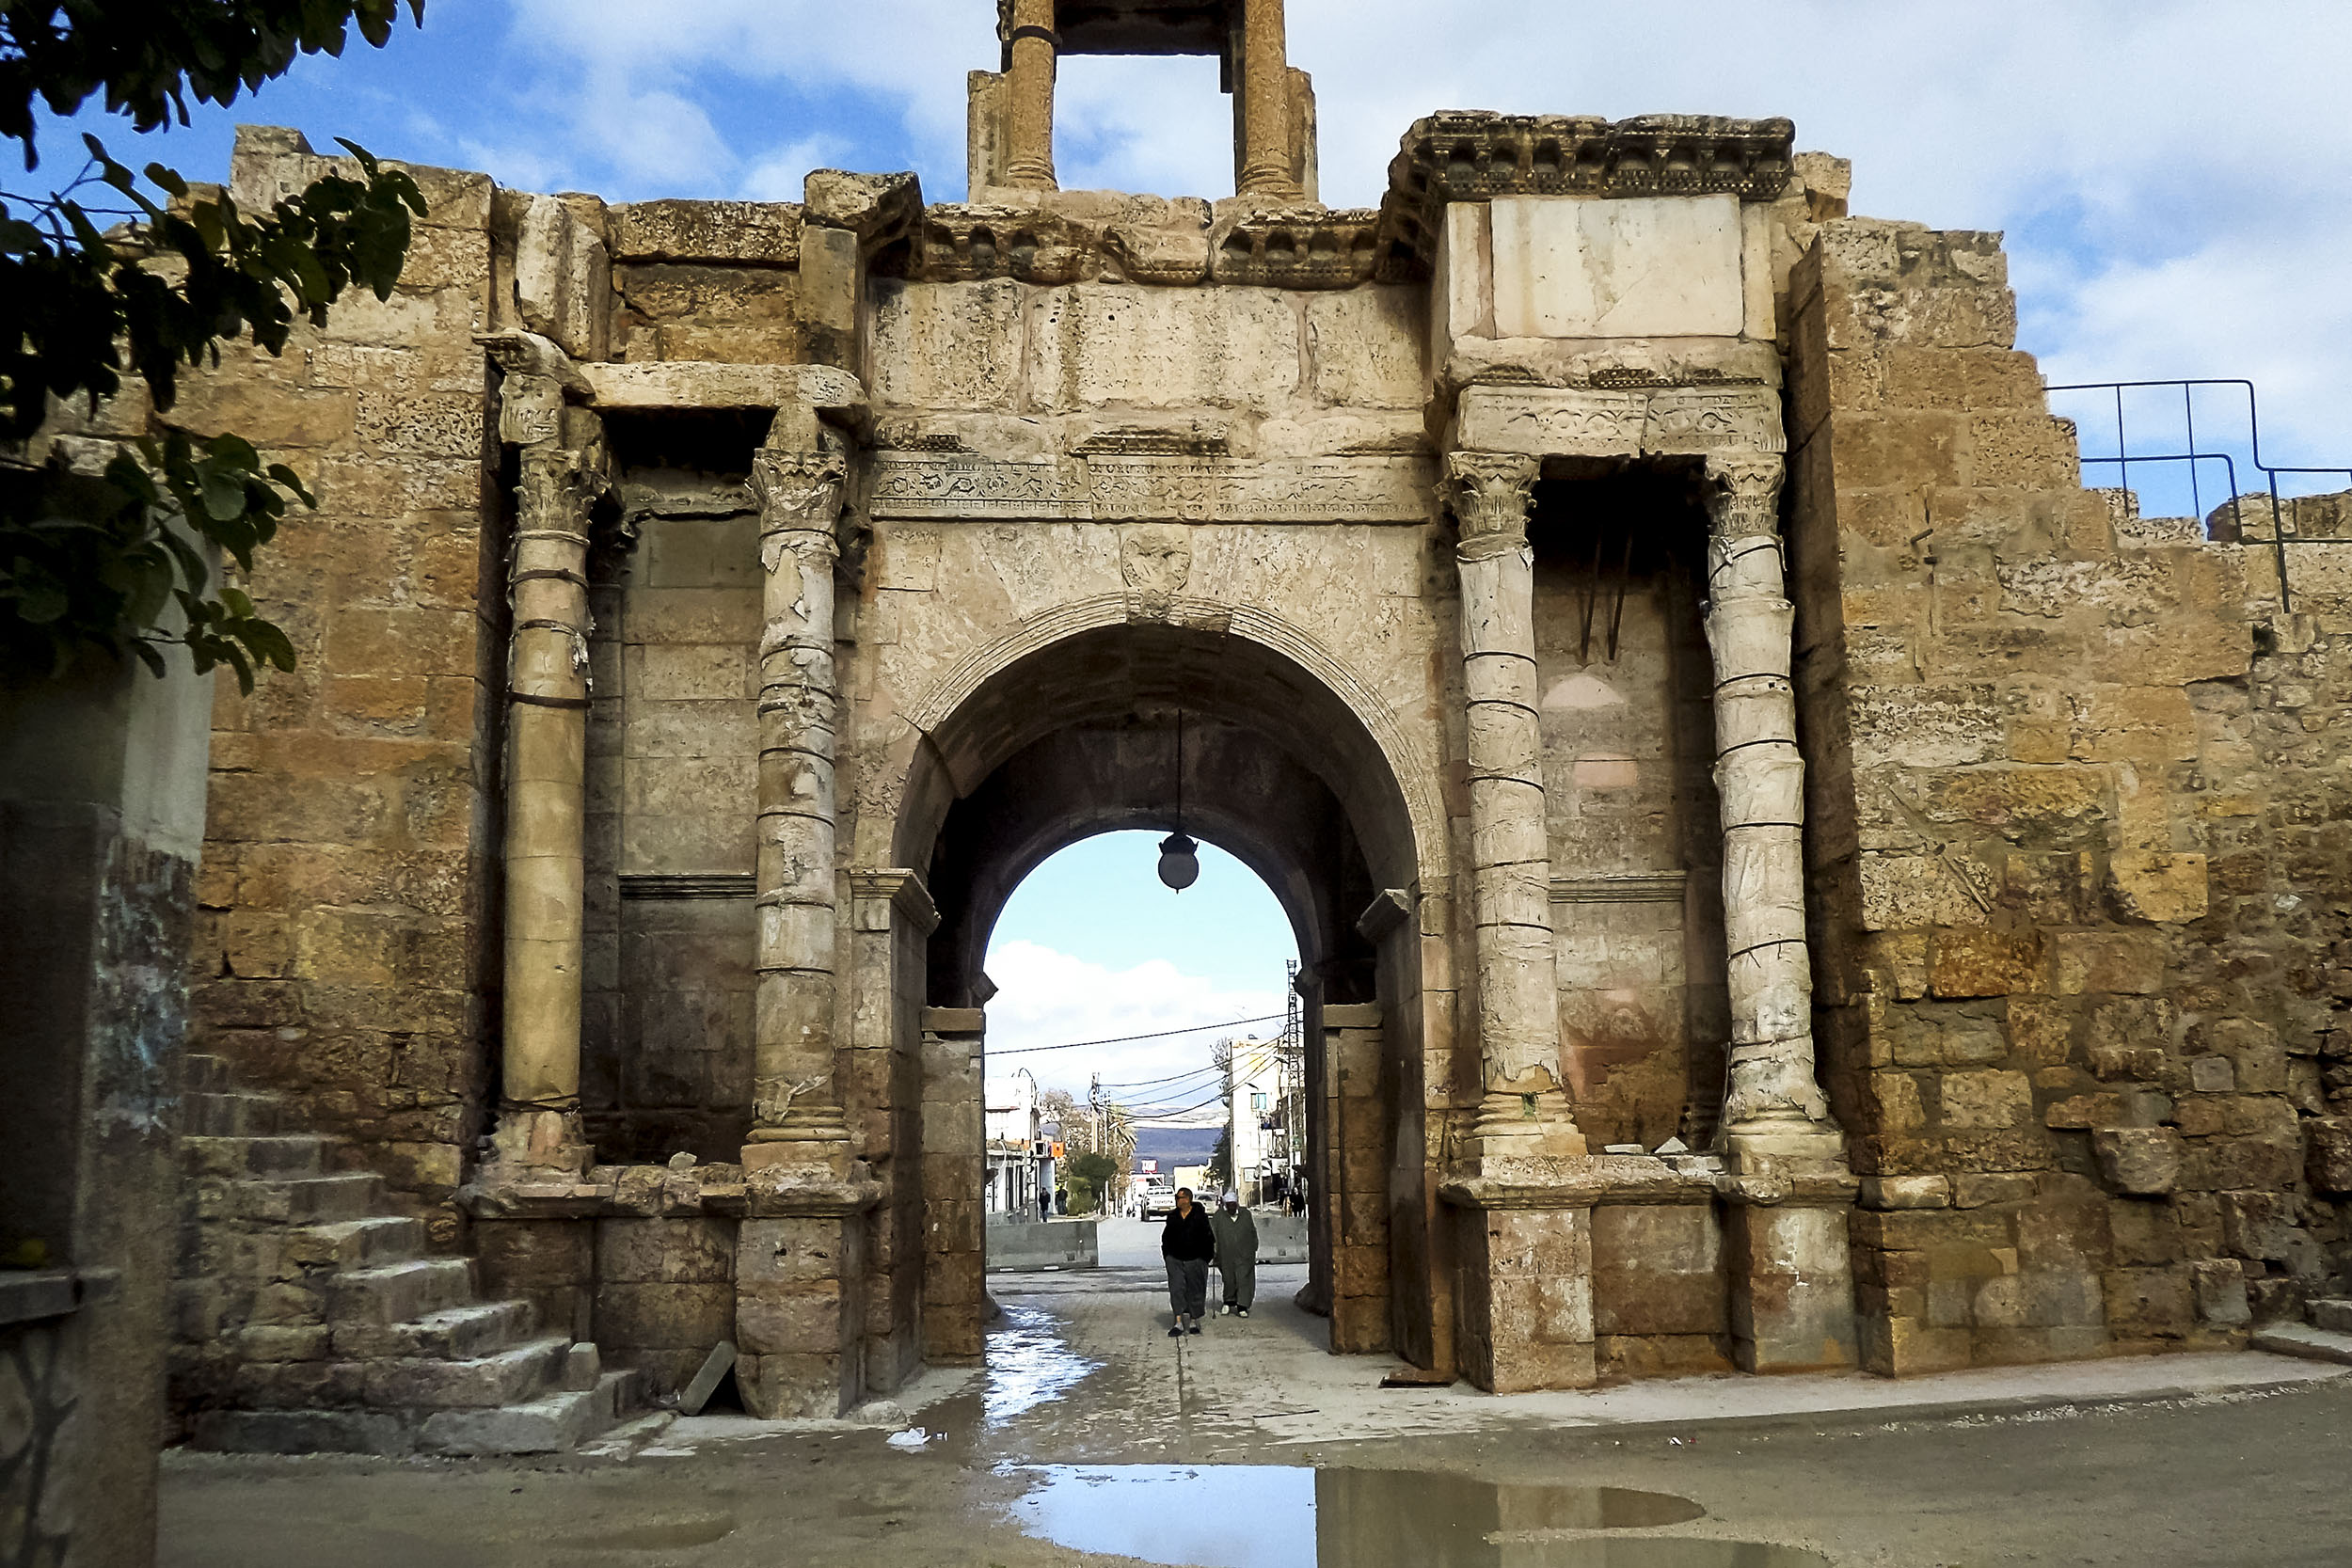  Arch of Caracalla